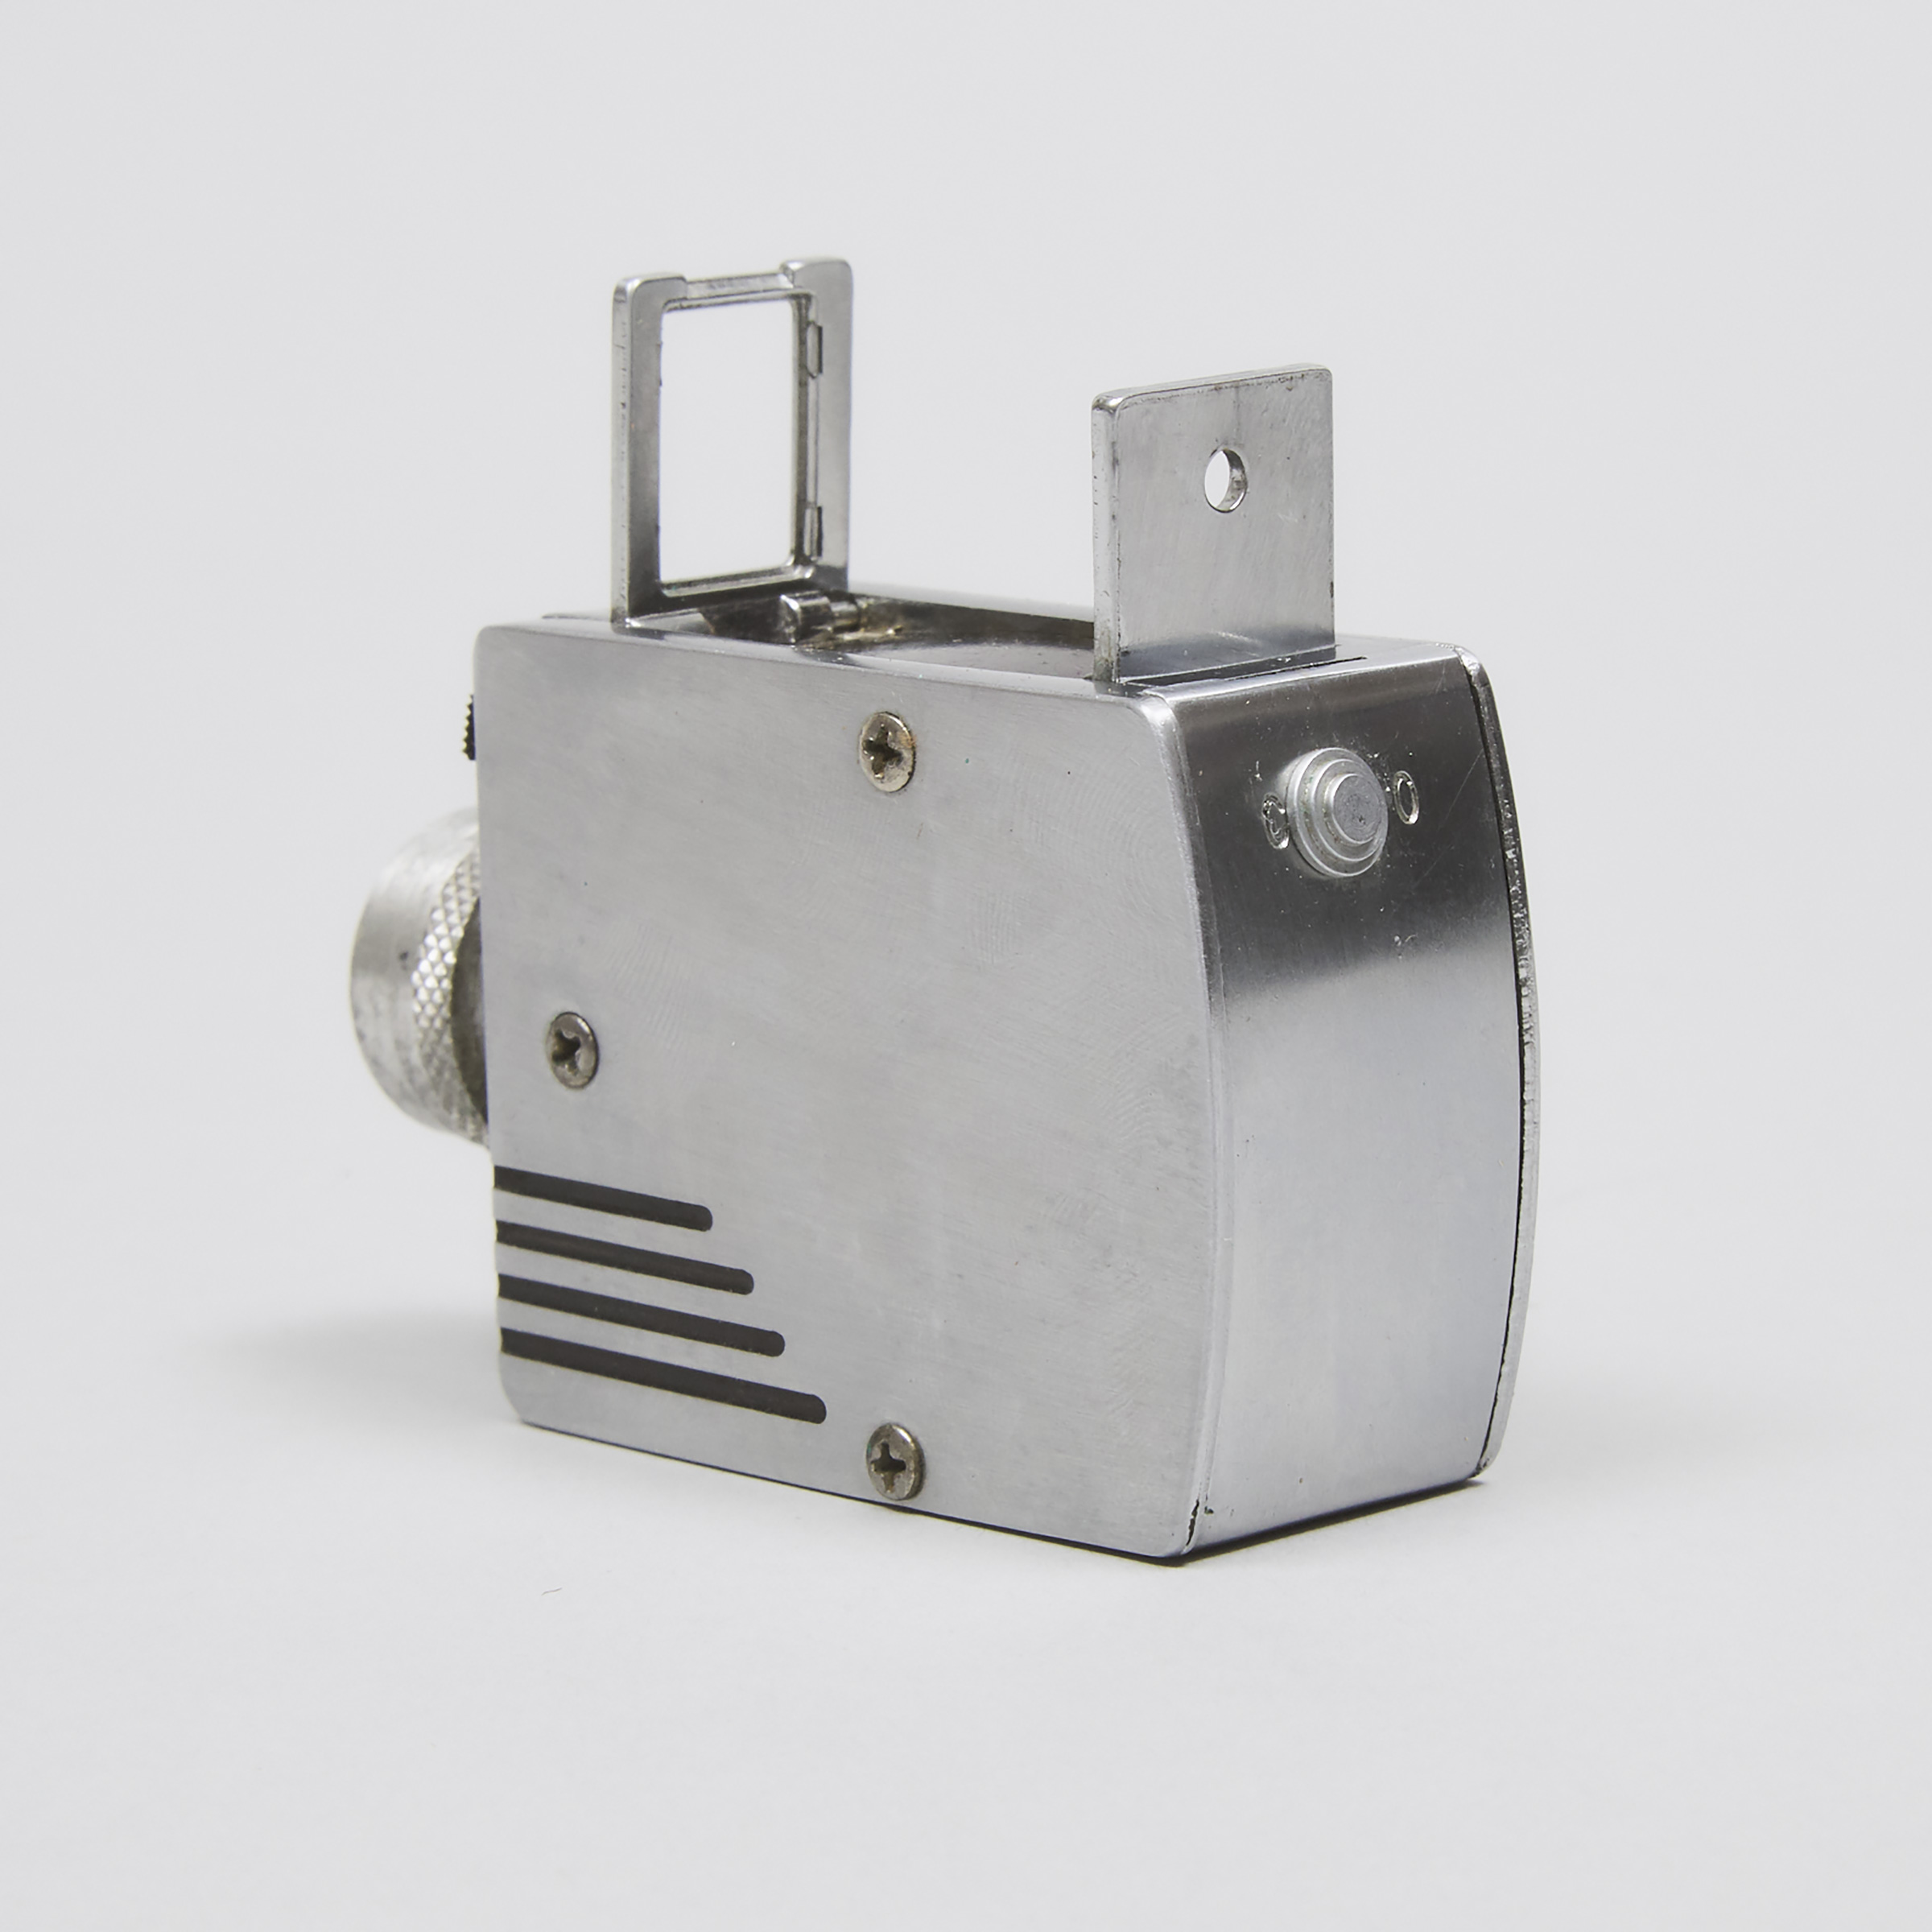 Universal 'Minute 16' Sub Miniature Camera, c.1950